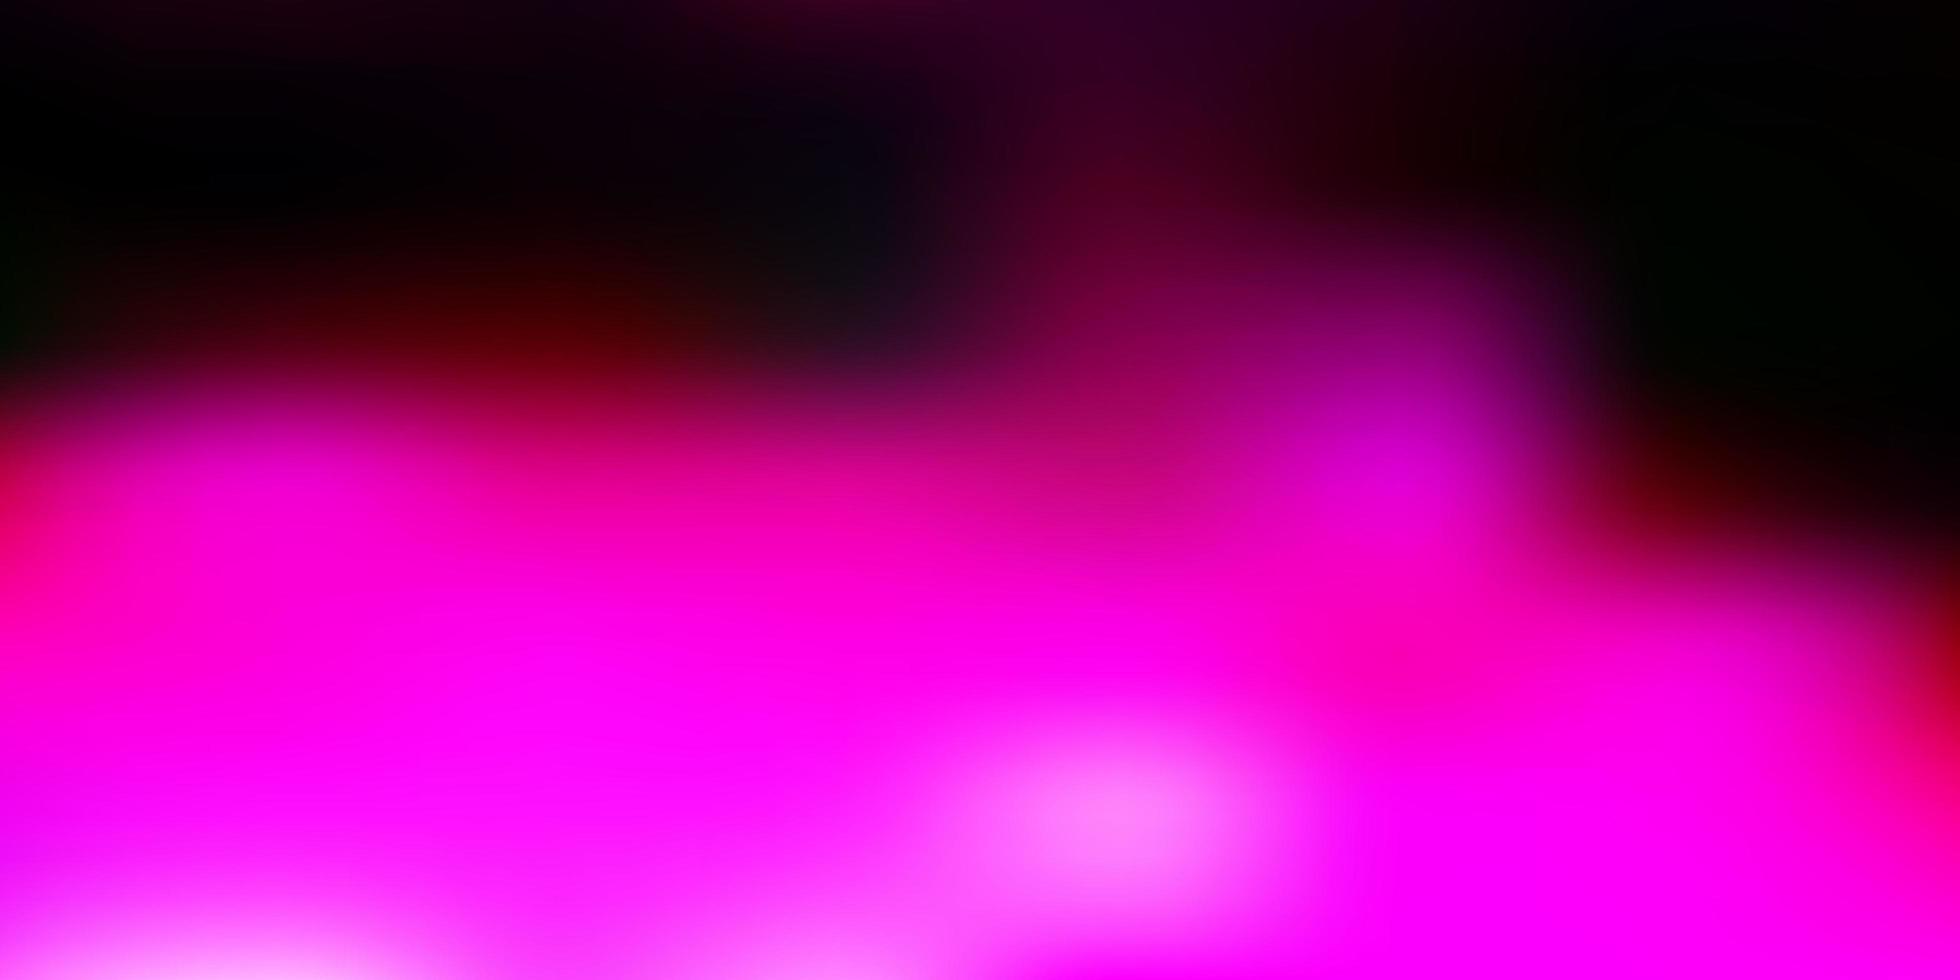 sfondo sfocato sfumato vettoriale rosa chiaro